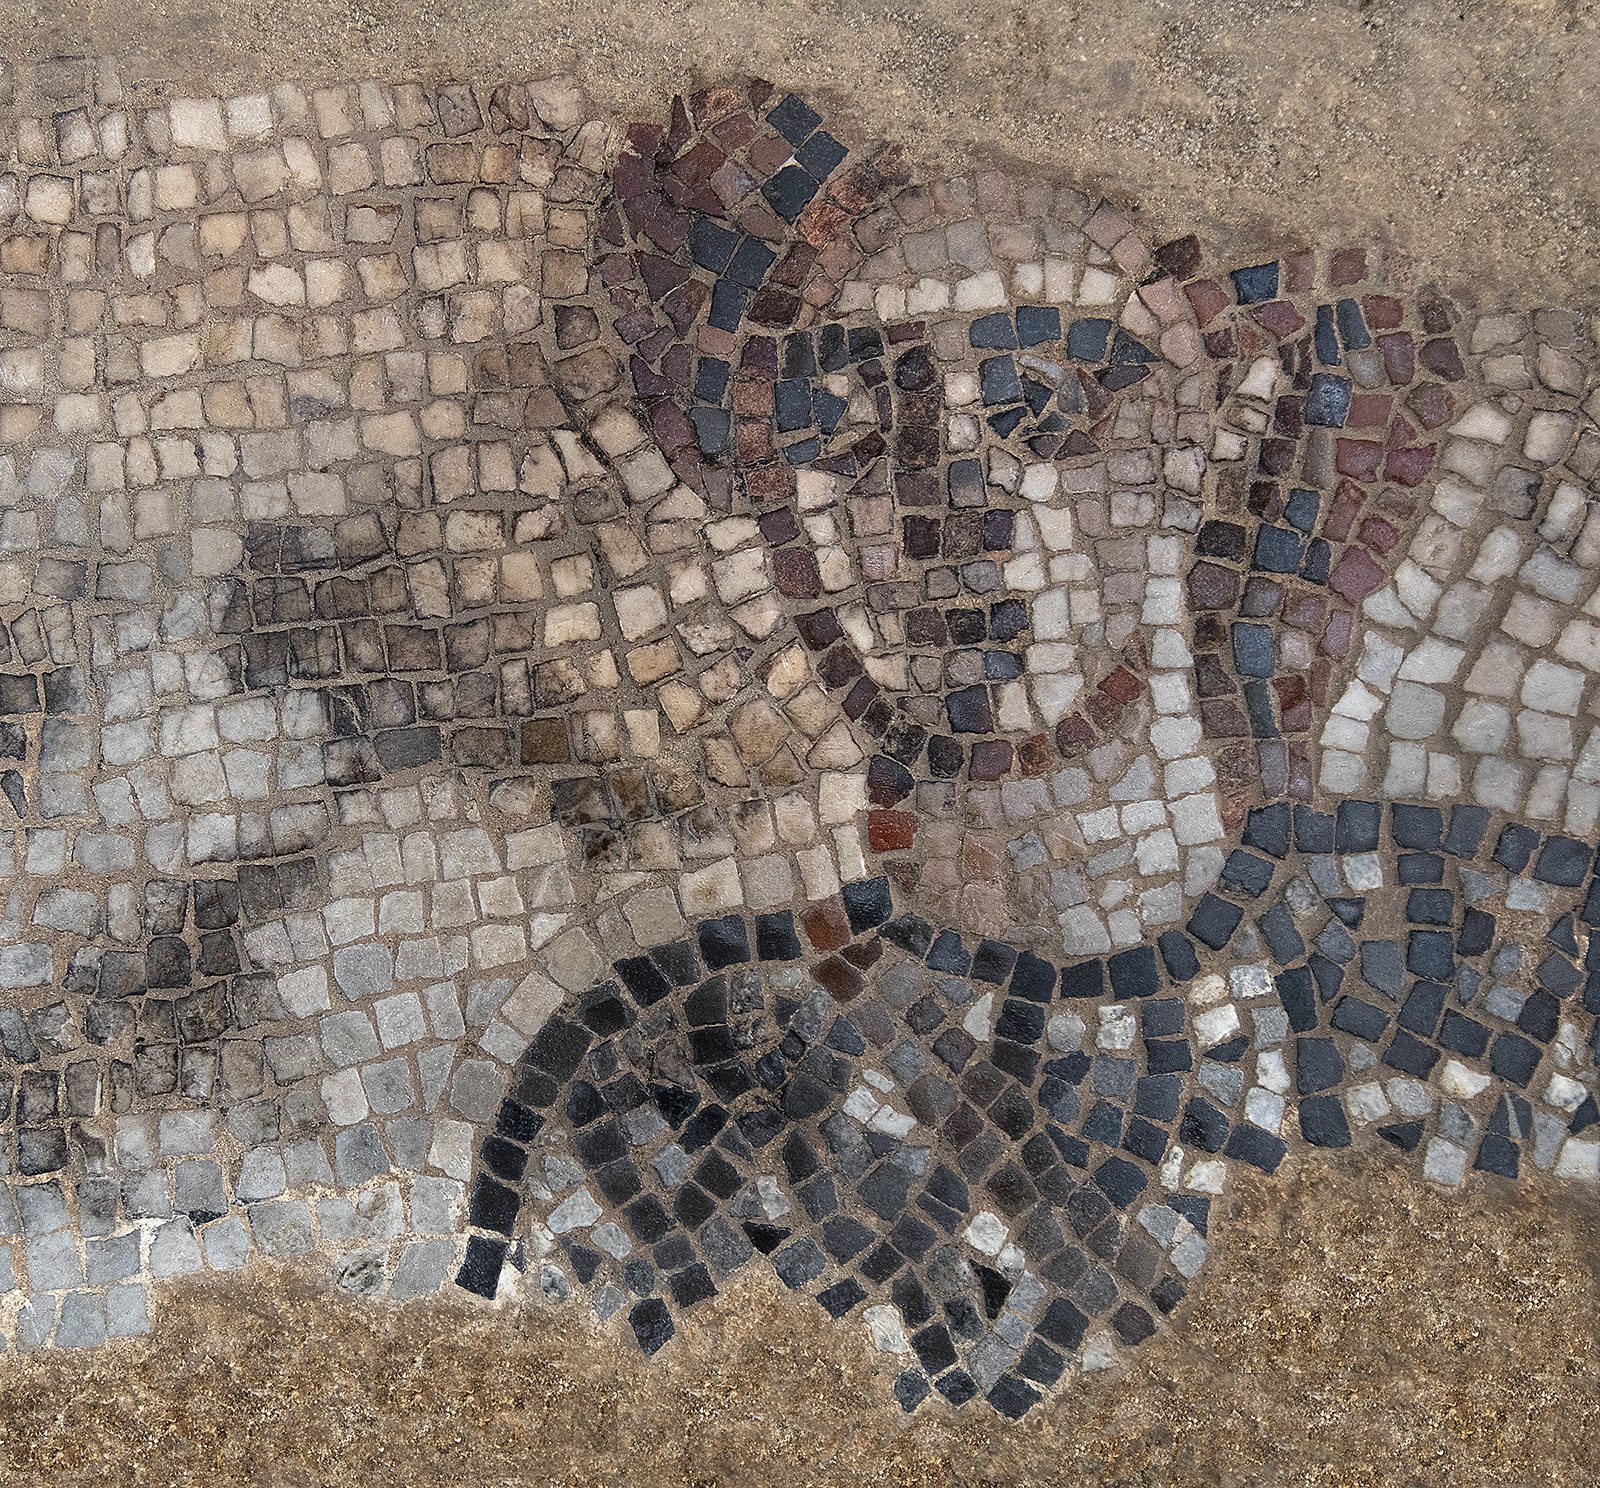 The Israelite commander Barak depicted in the Huqoq synagogue mosaic. Photo © Jim Haberman